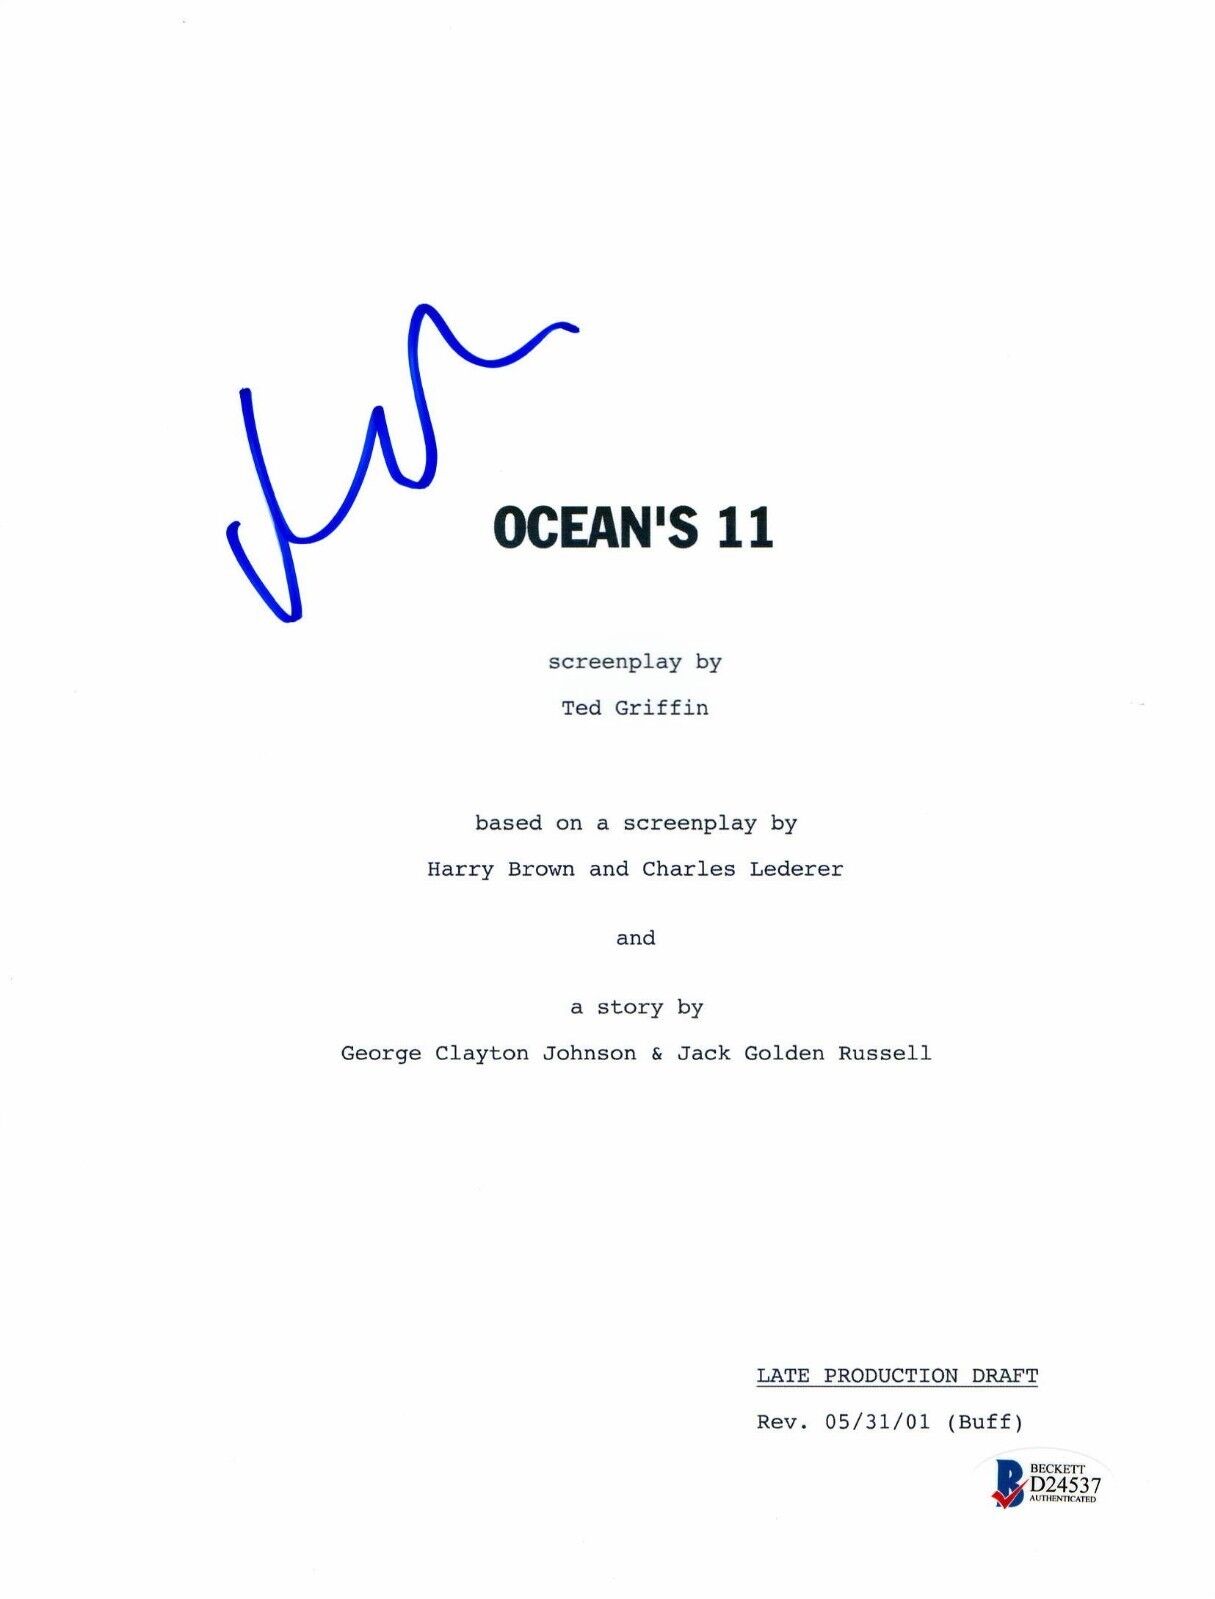 MATT DAMON SIGNED AUTOGRAPHED OCEAN'S 11 FULL MOVIE SCRIPT BECKETT BAS COA